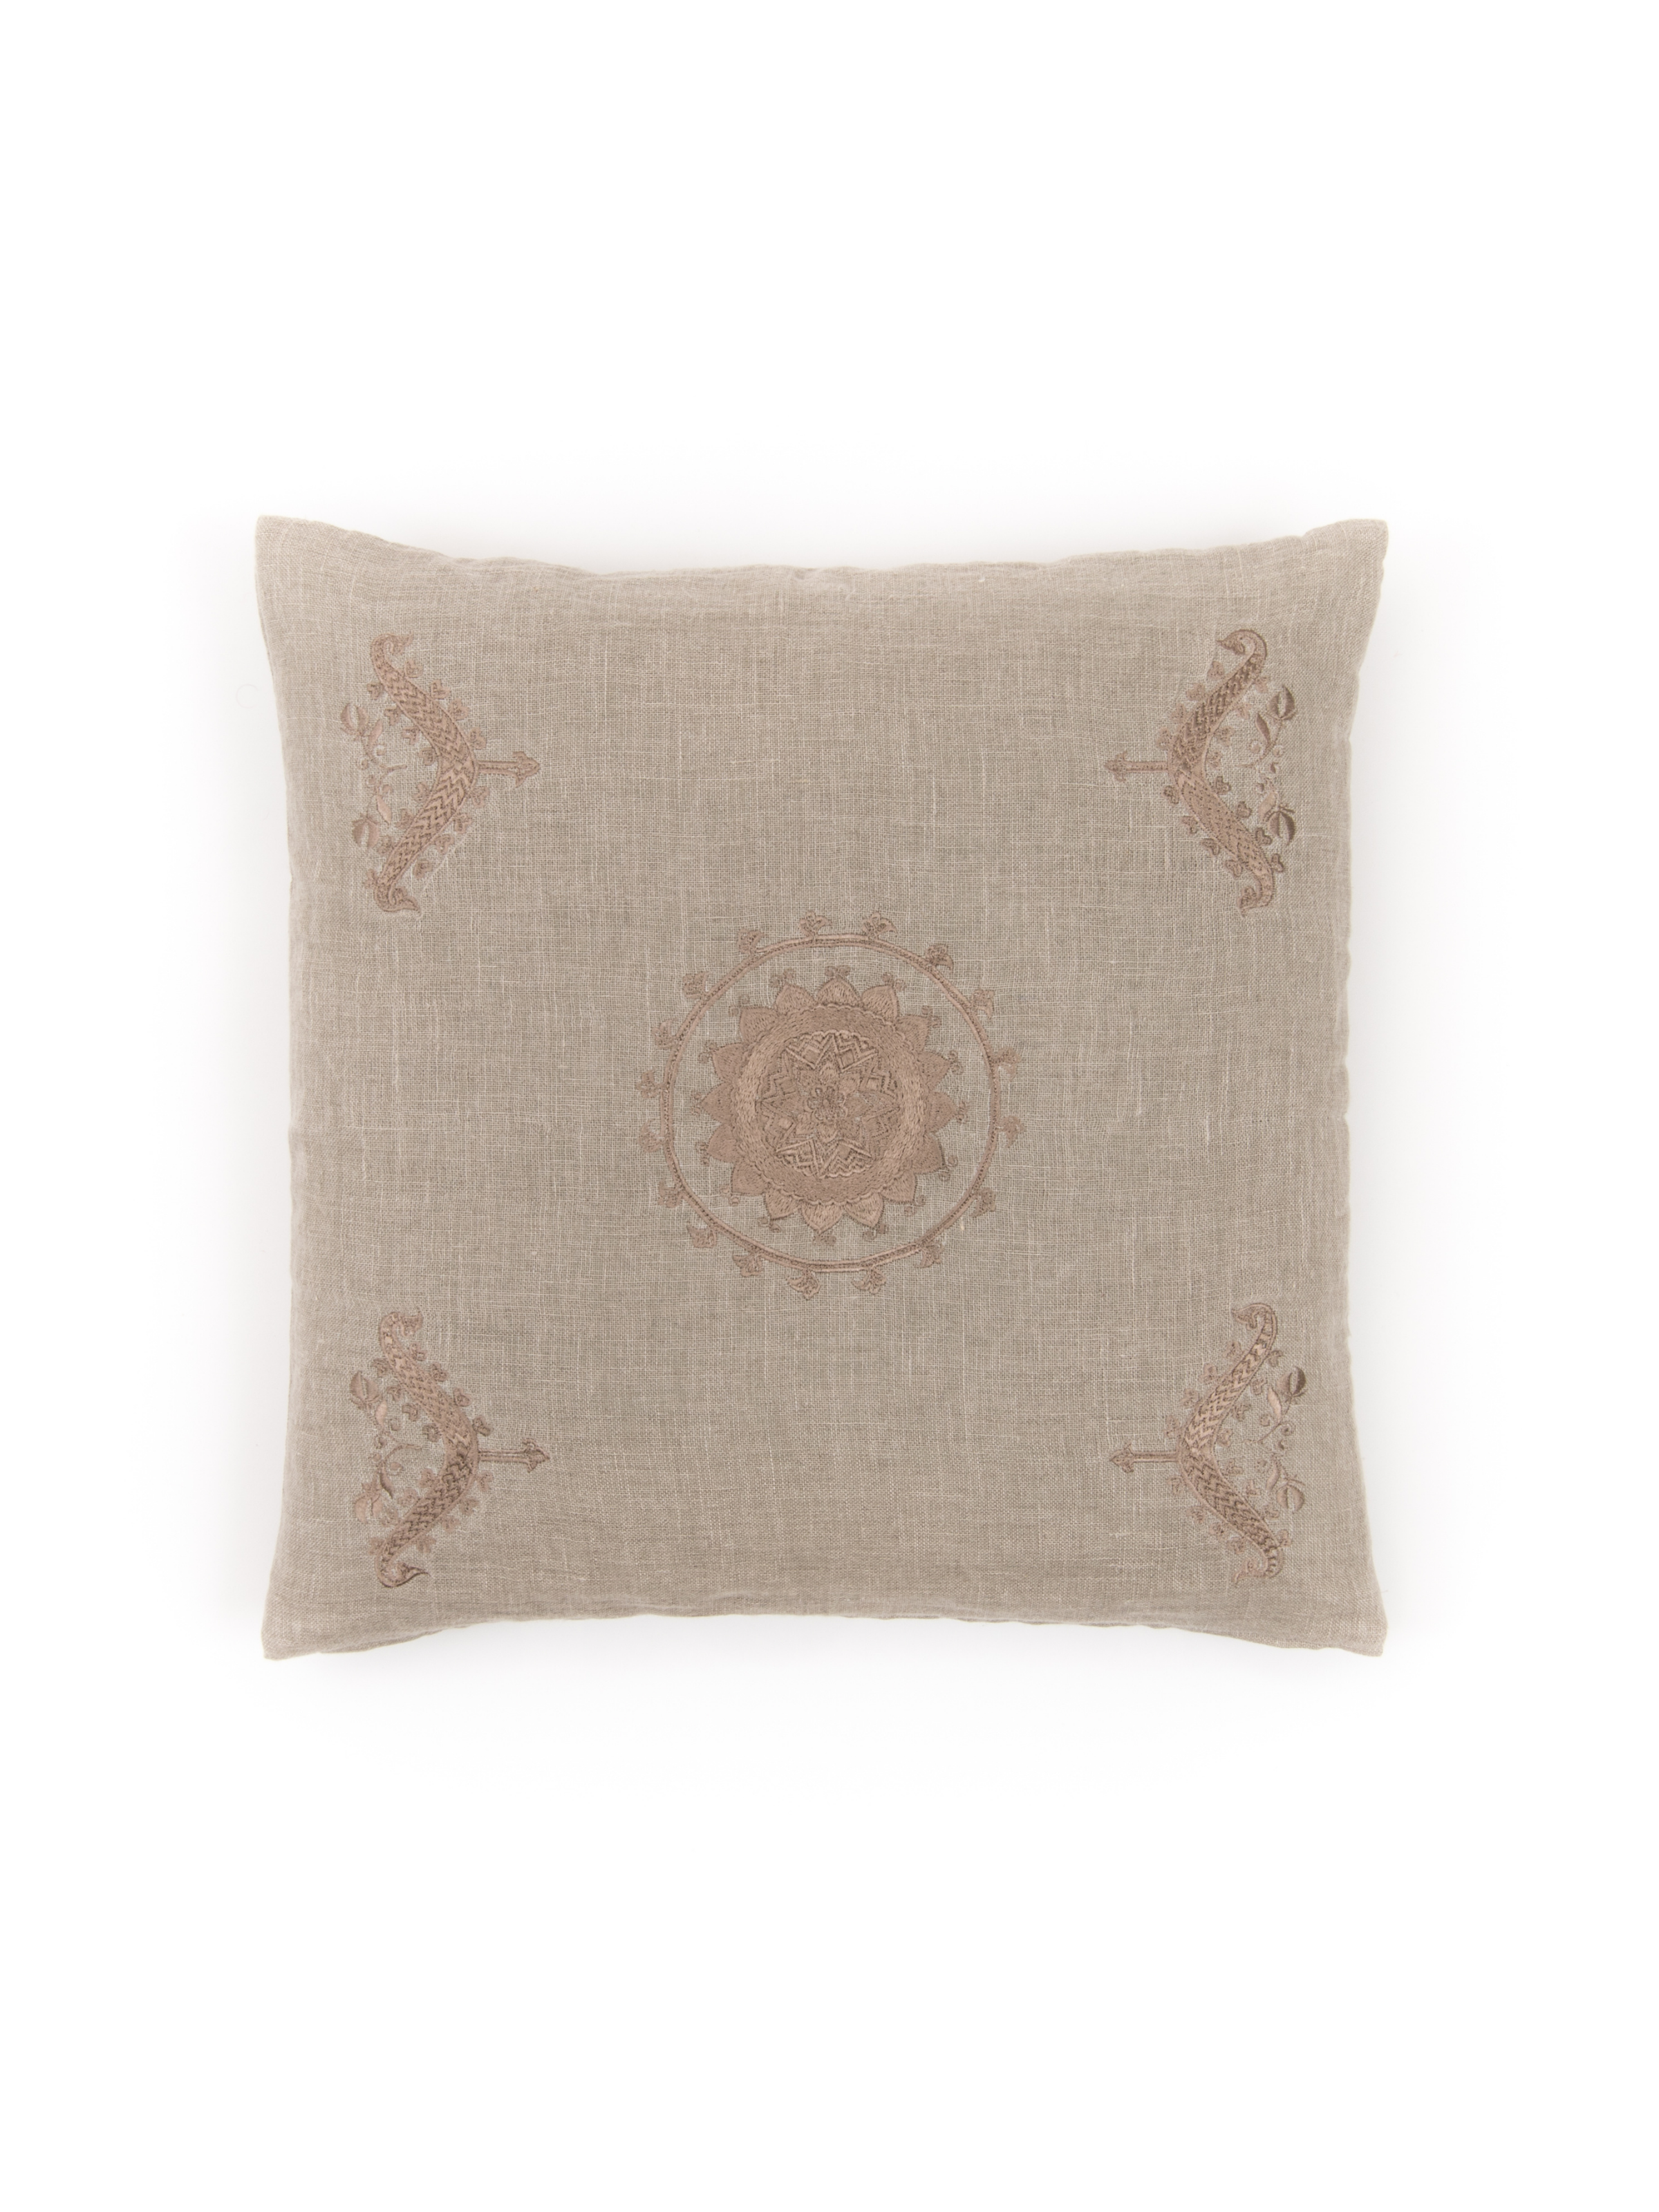 Central Asia Decorative Pillow